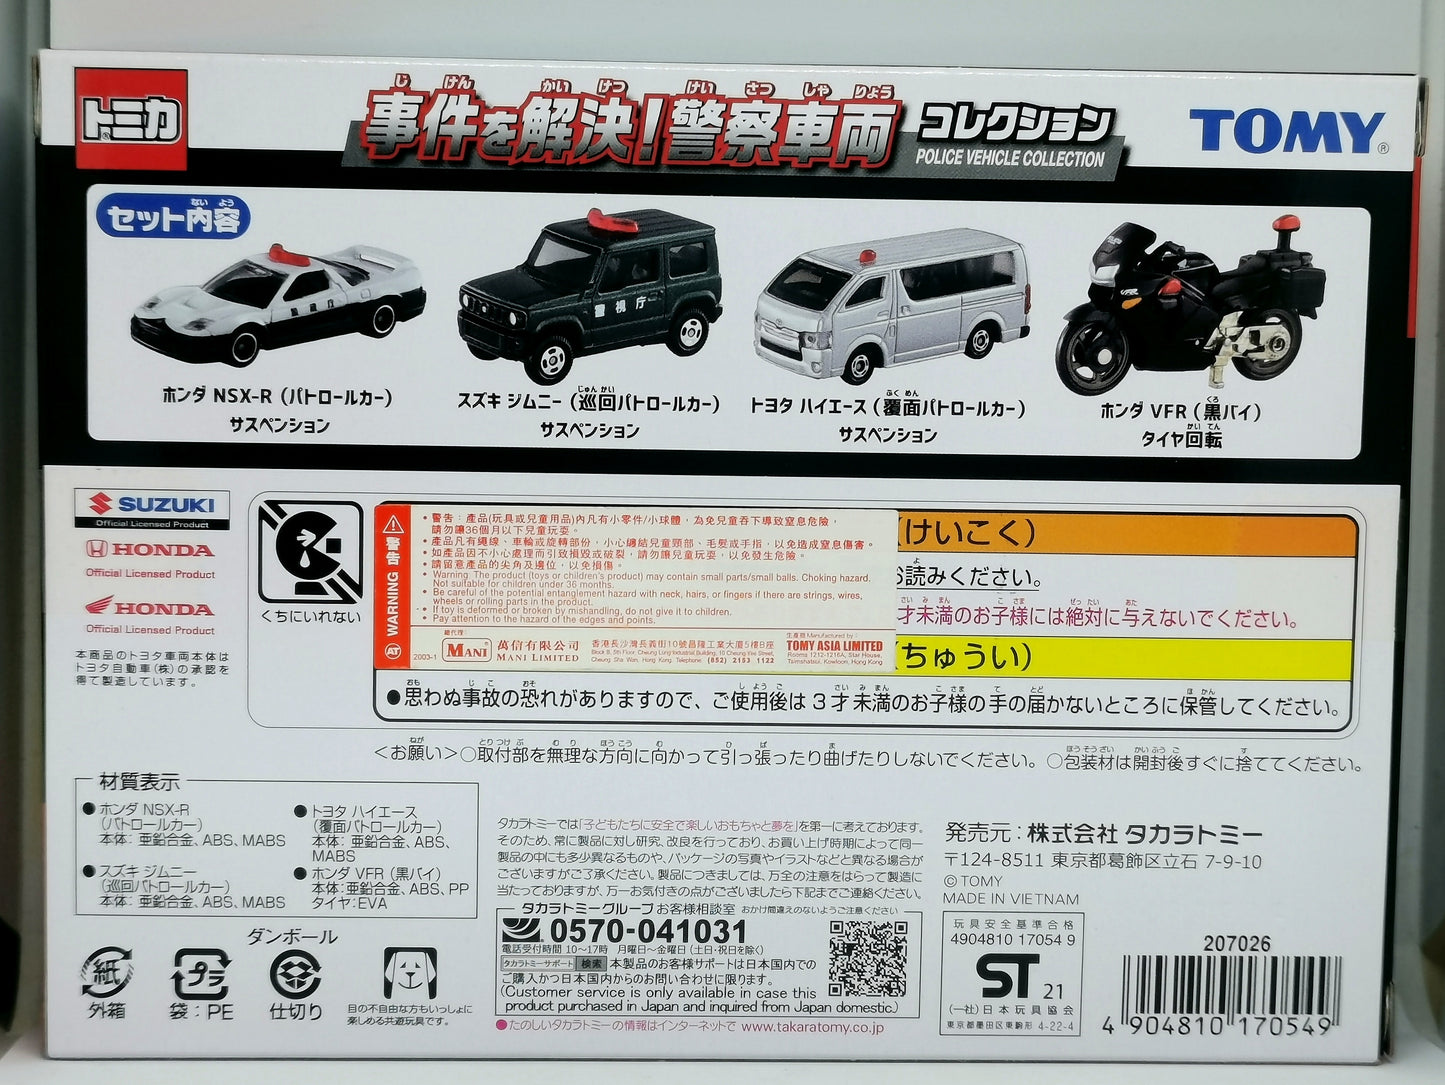 Tomica Gift Set Japan Police Vehicle Collection Takara Tomy